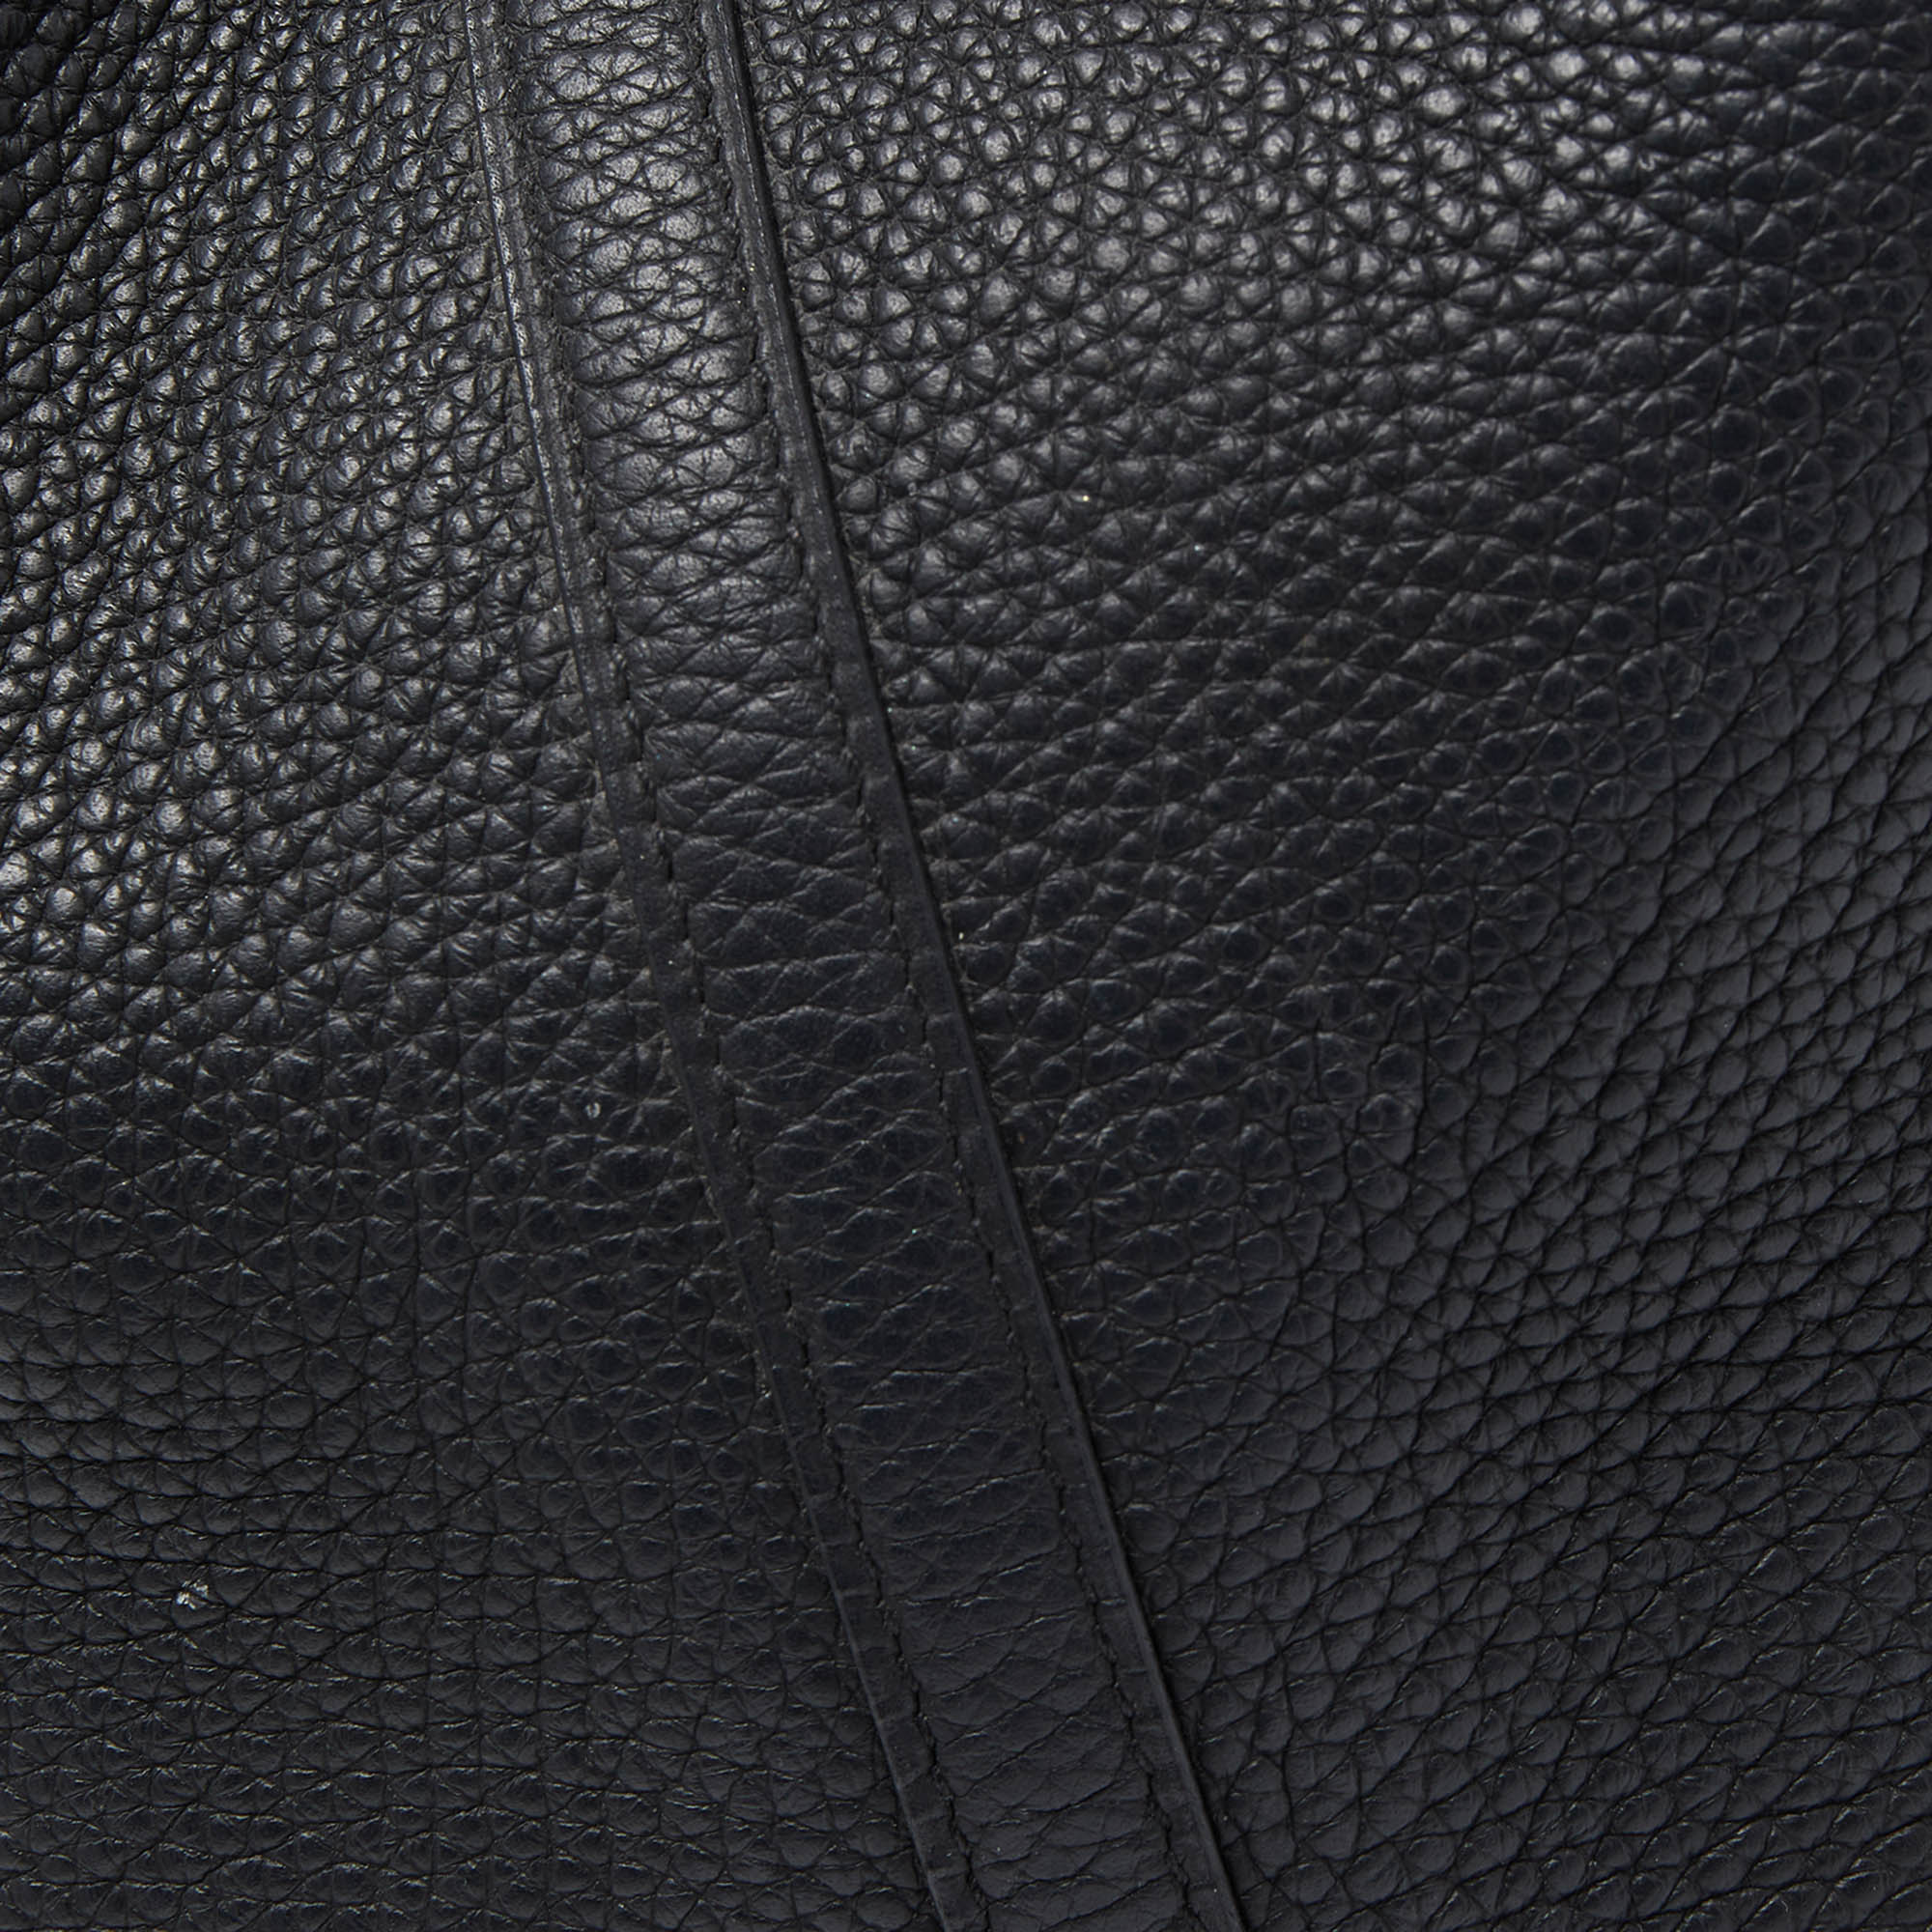 Hermes Black Taurillon Clemence Leather Picotin Lock 22 Bag